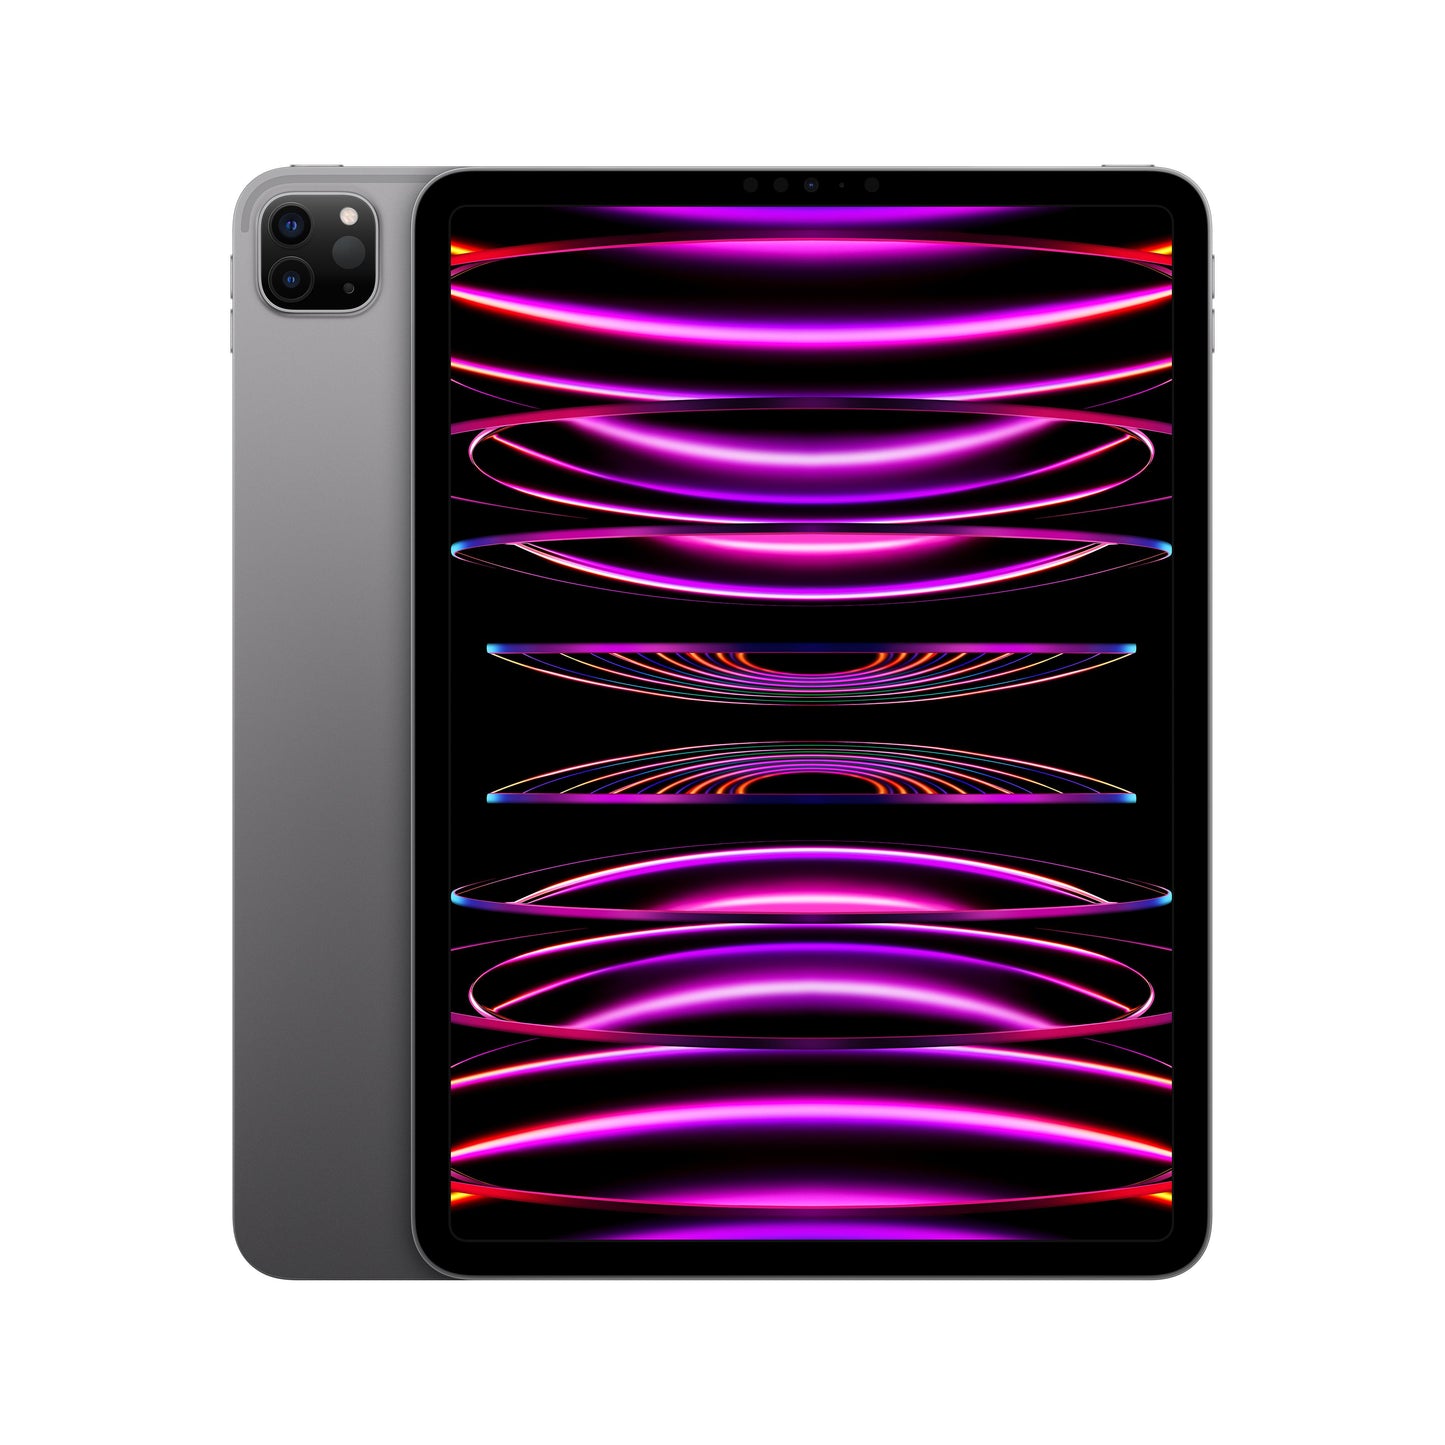 2022 11-inch iPad Pro Wi-Fi 2TB - Space Grey (4th generation)